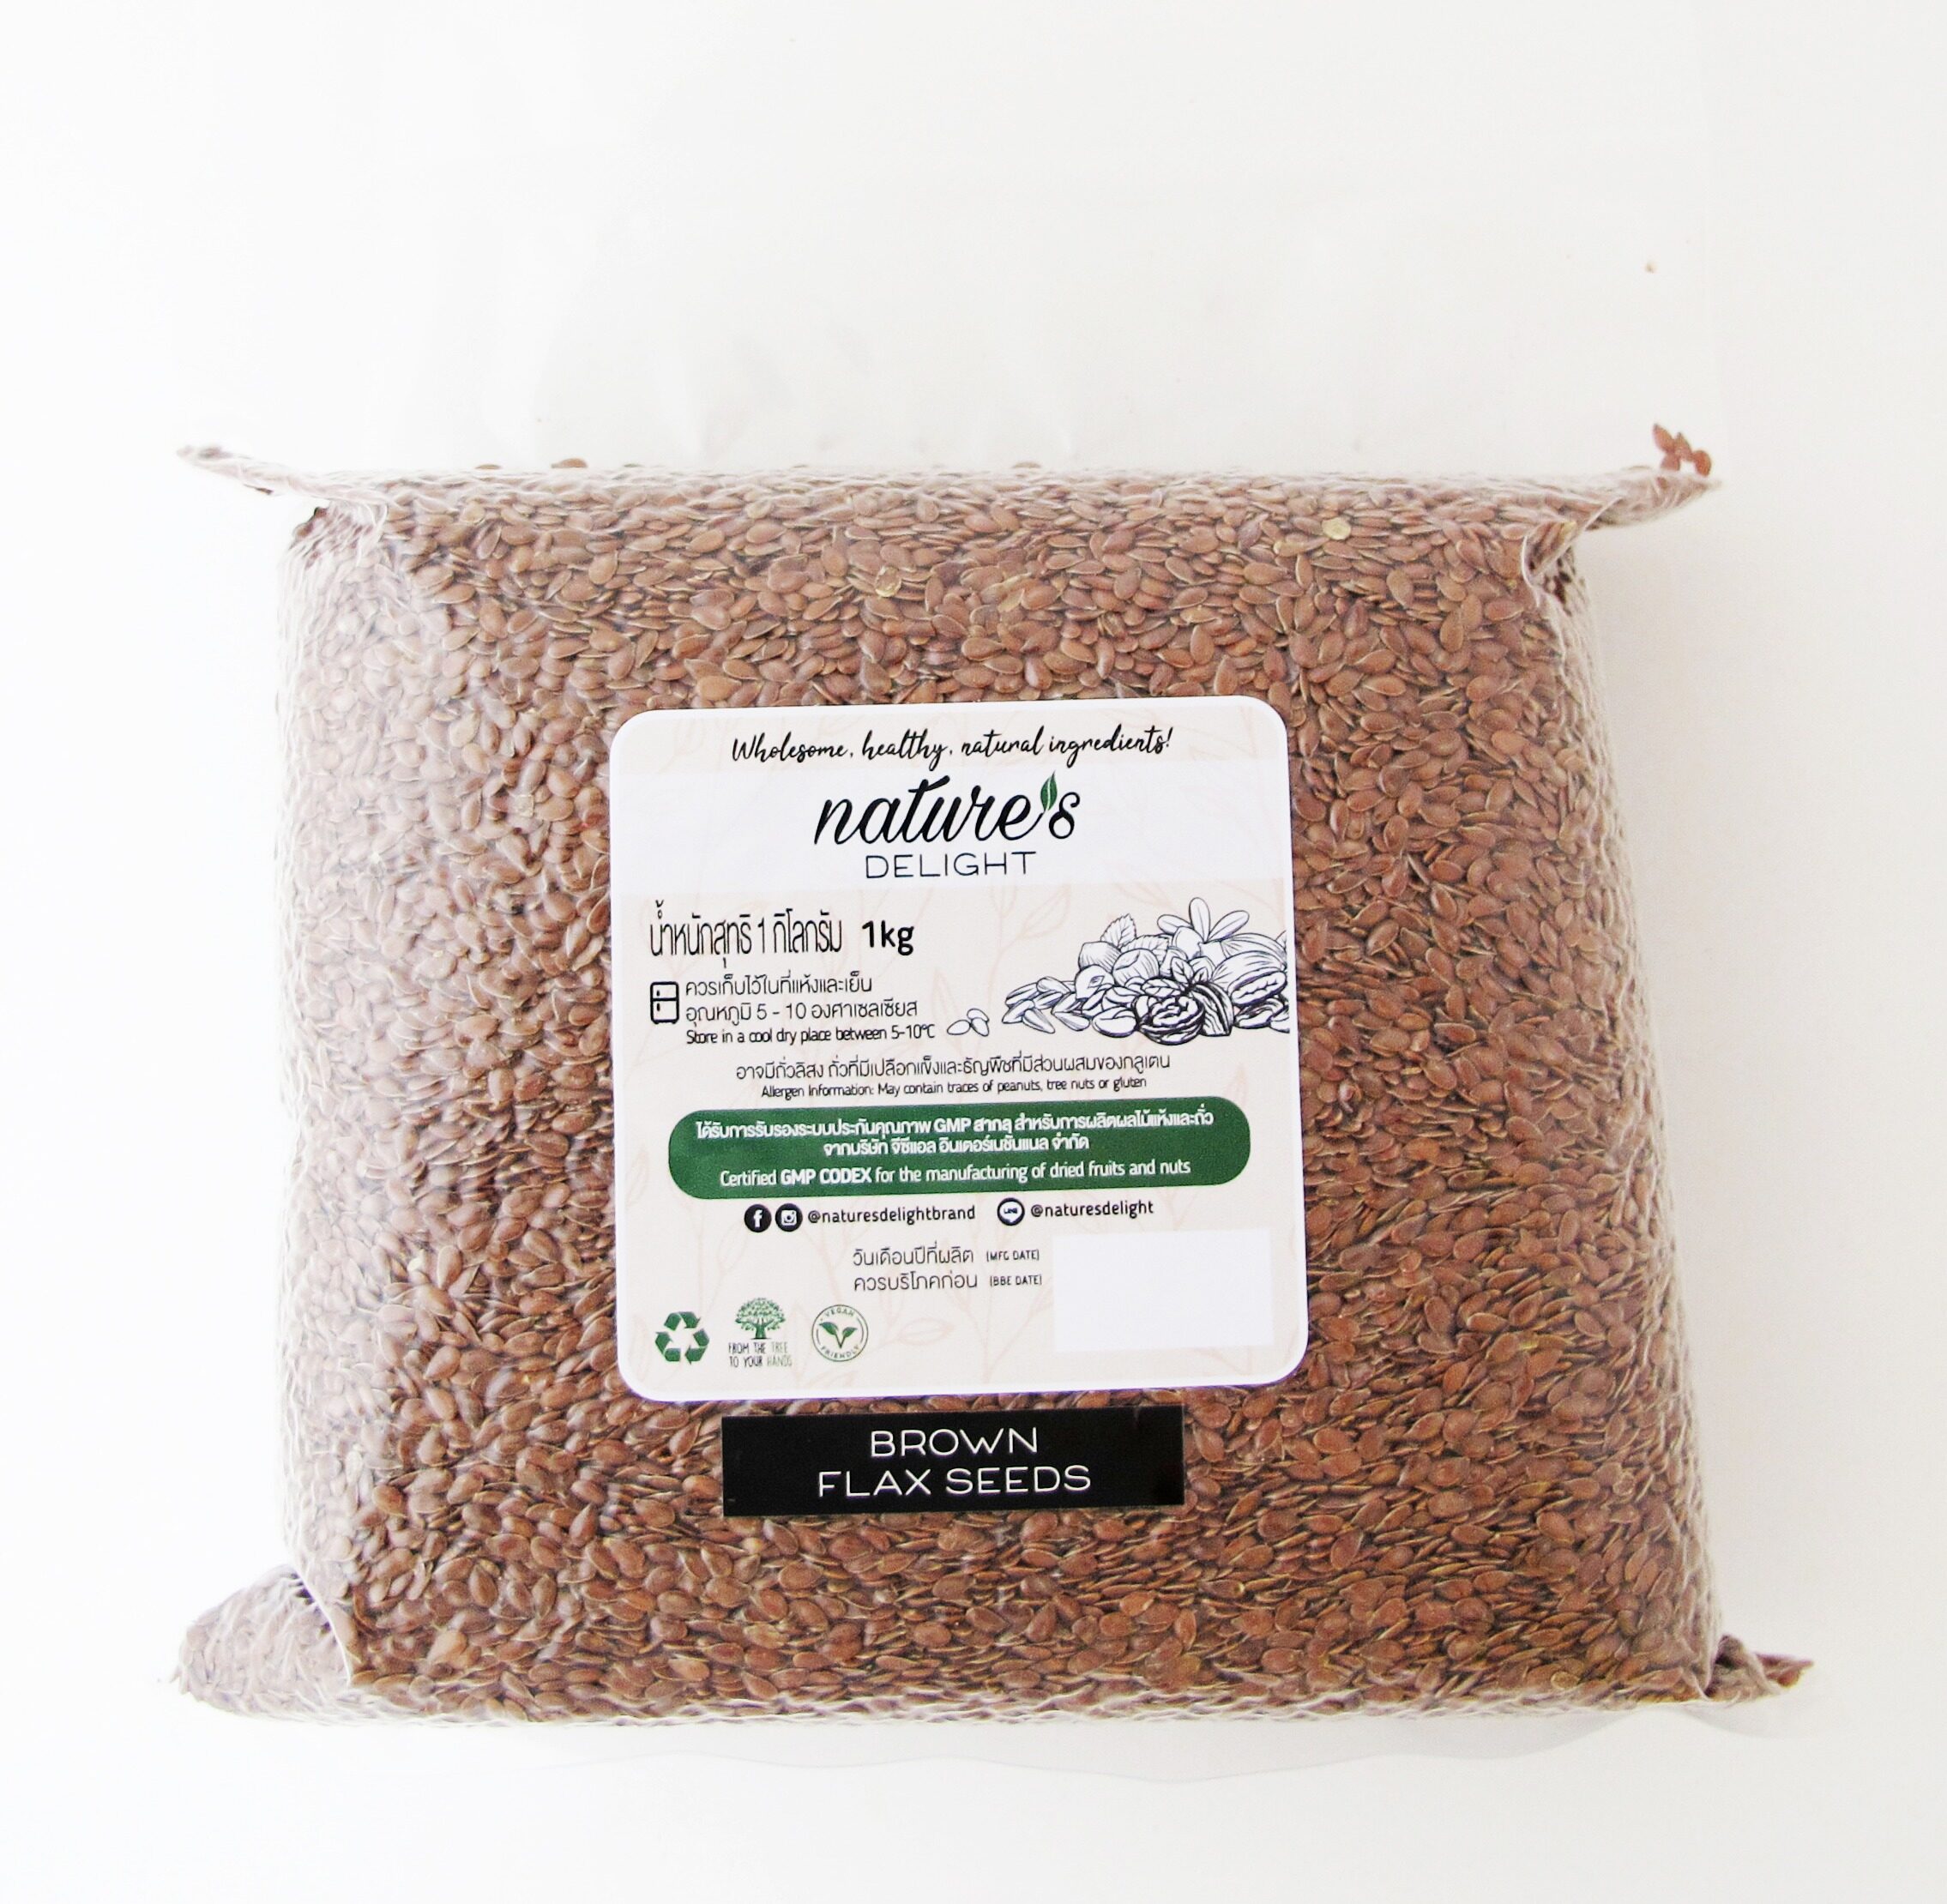 Nature's Delight Brown Flax Seeds 1kg Bulk Pack/ เมล็ดแฟล็กสีน้ำตาล 1กก ตราเนเจอร์ส ดีไลท์